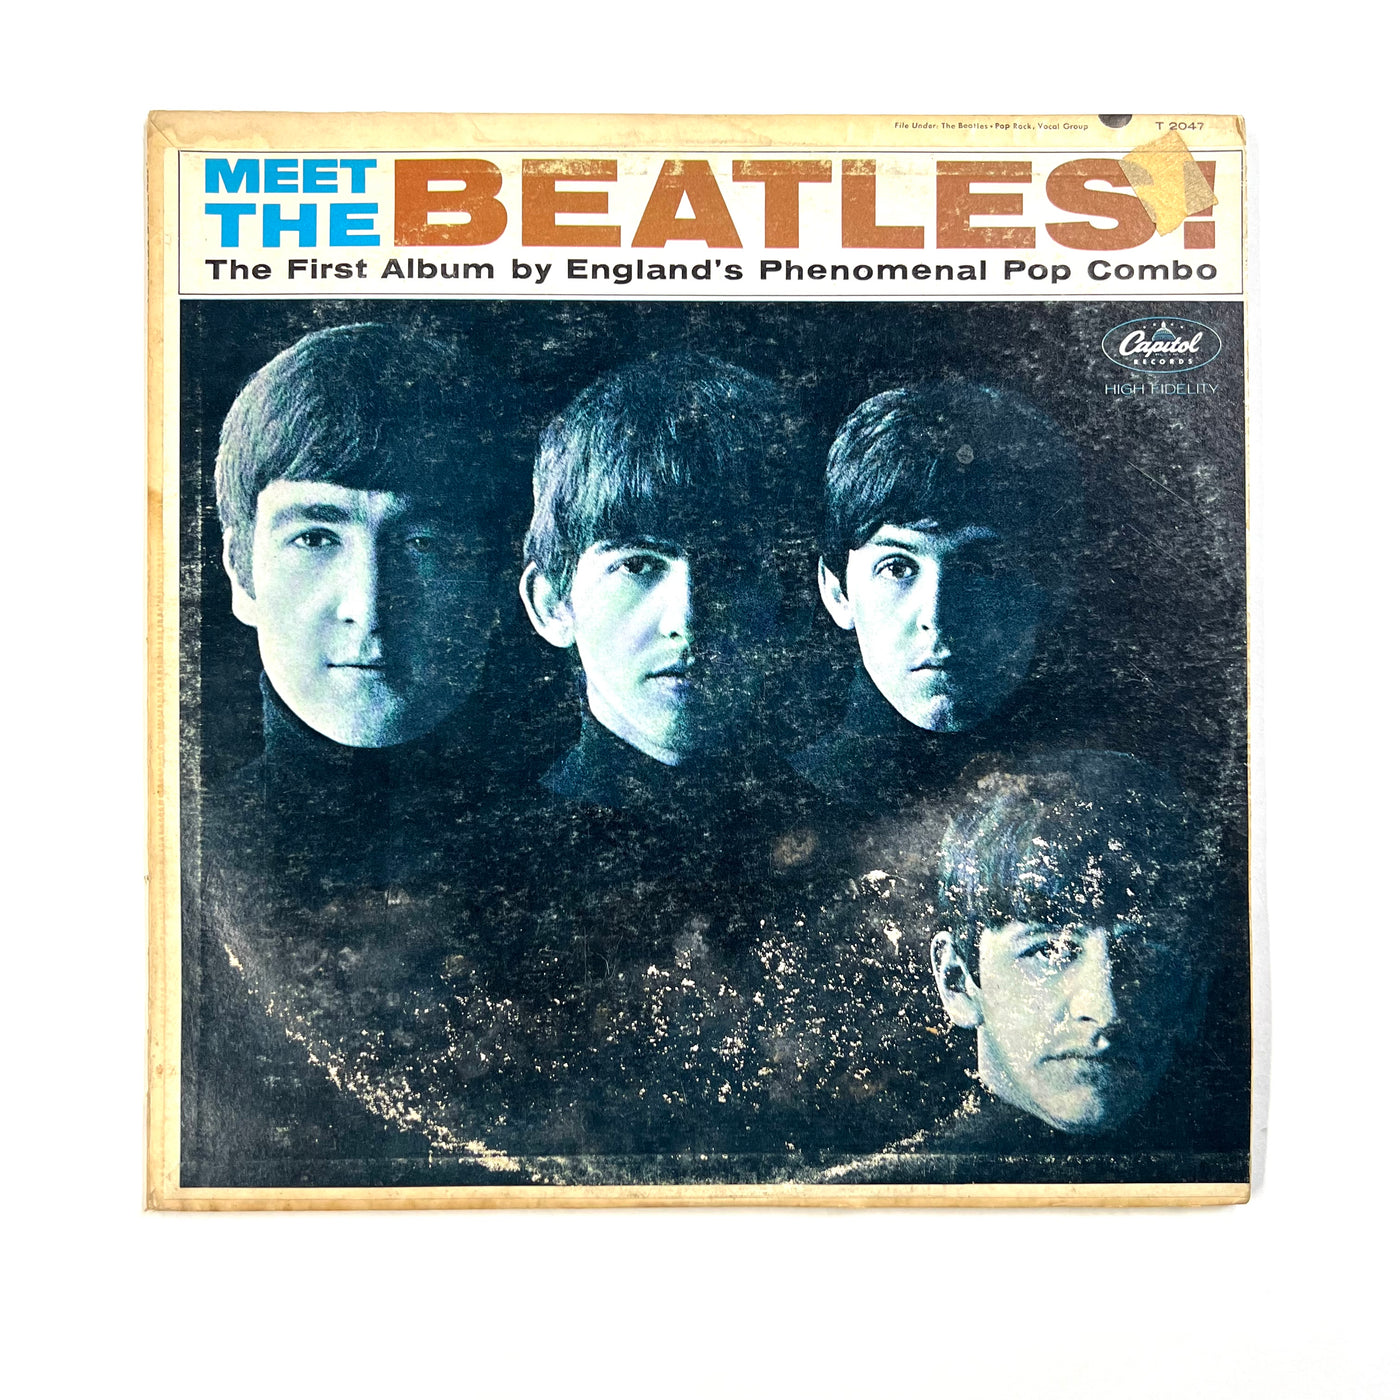 The Beatles - Meet The Beatles!